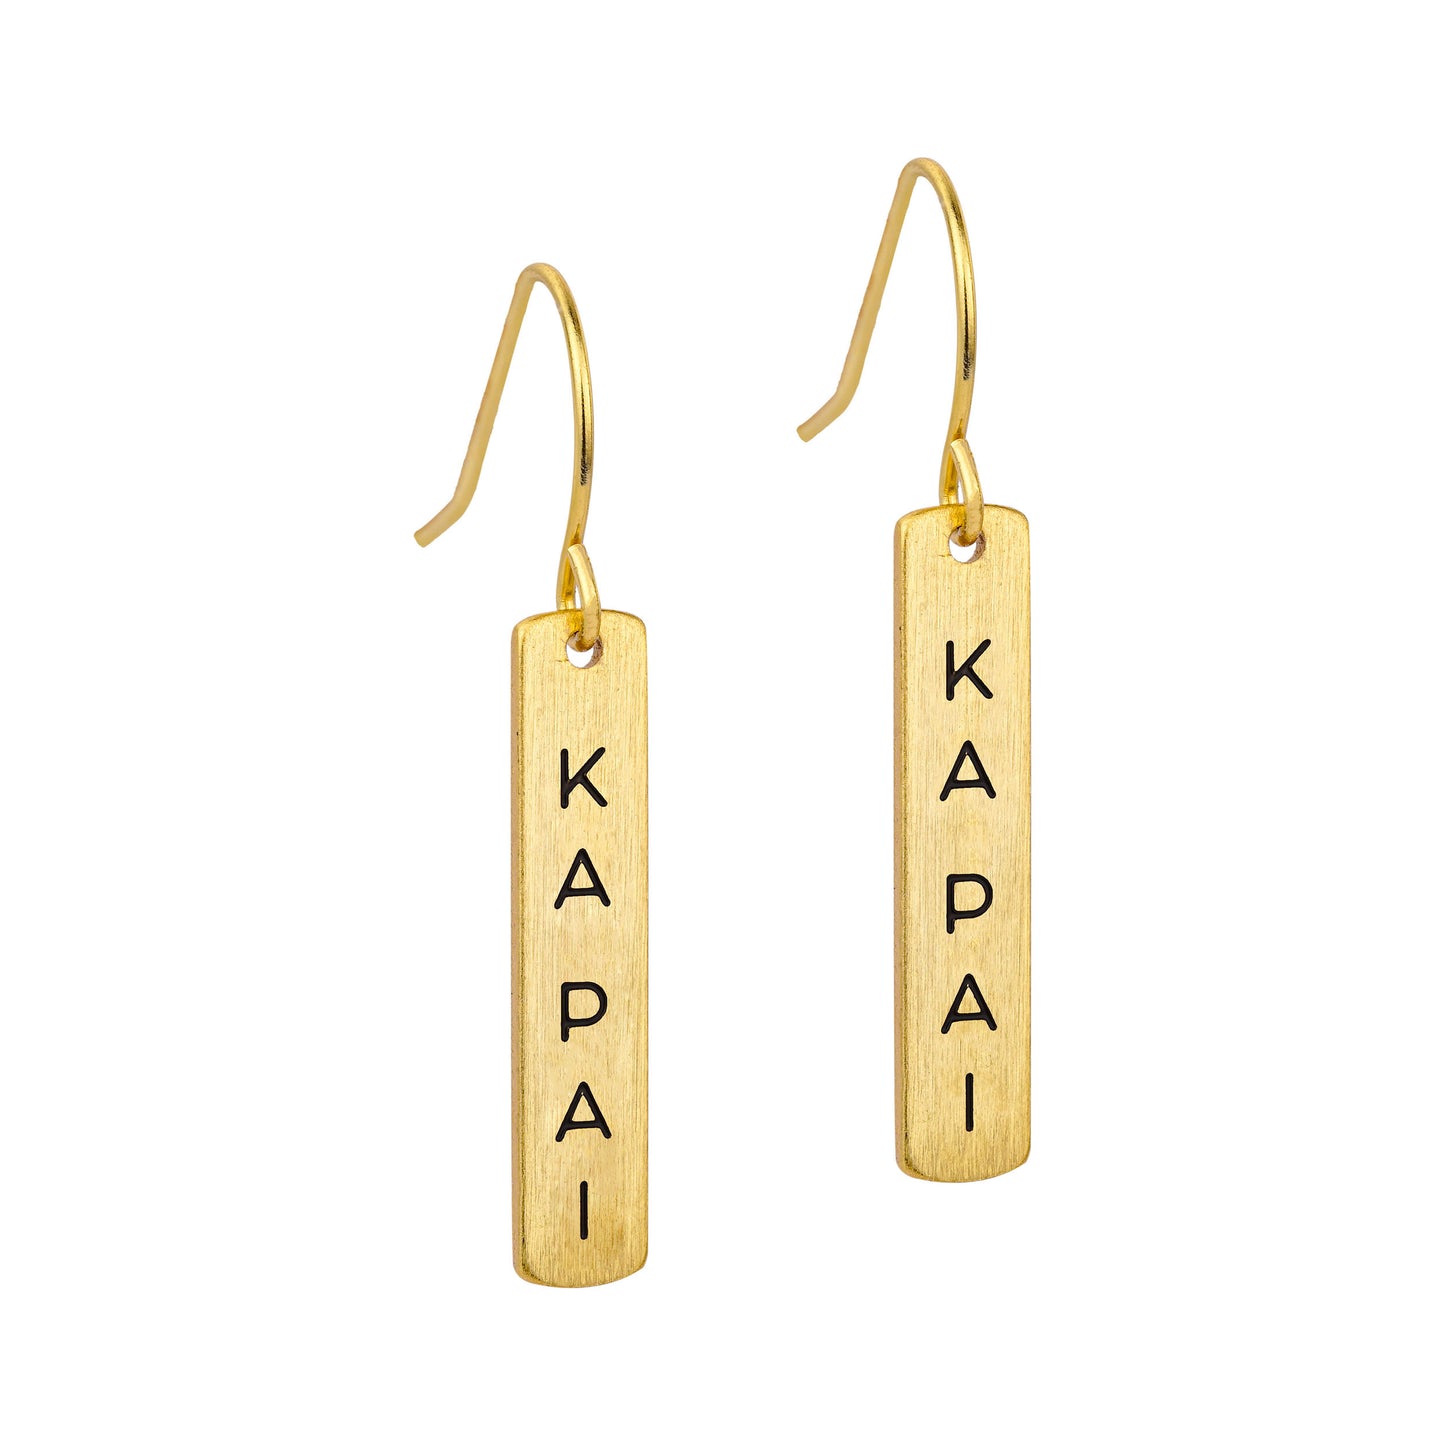 Ka pai – Well done – Earrings